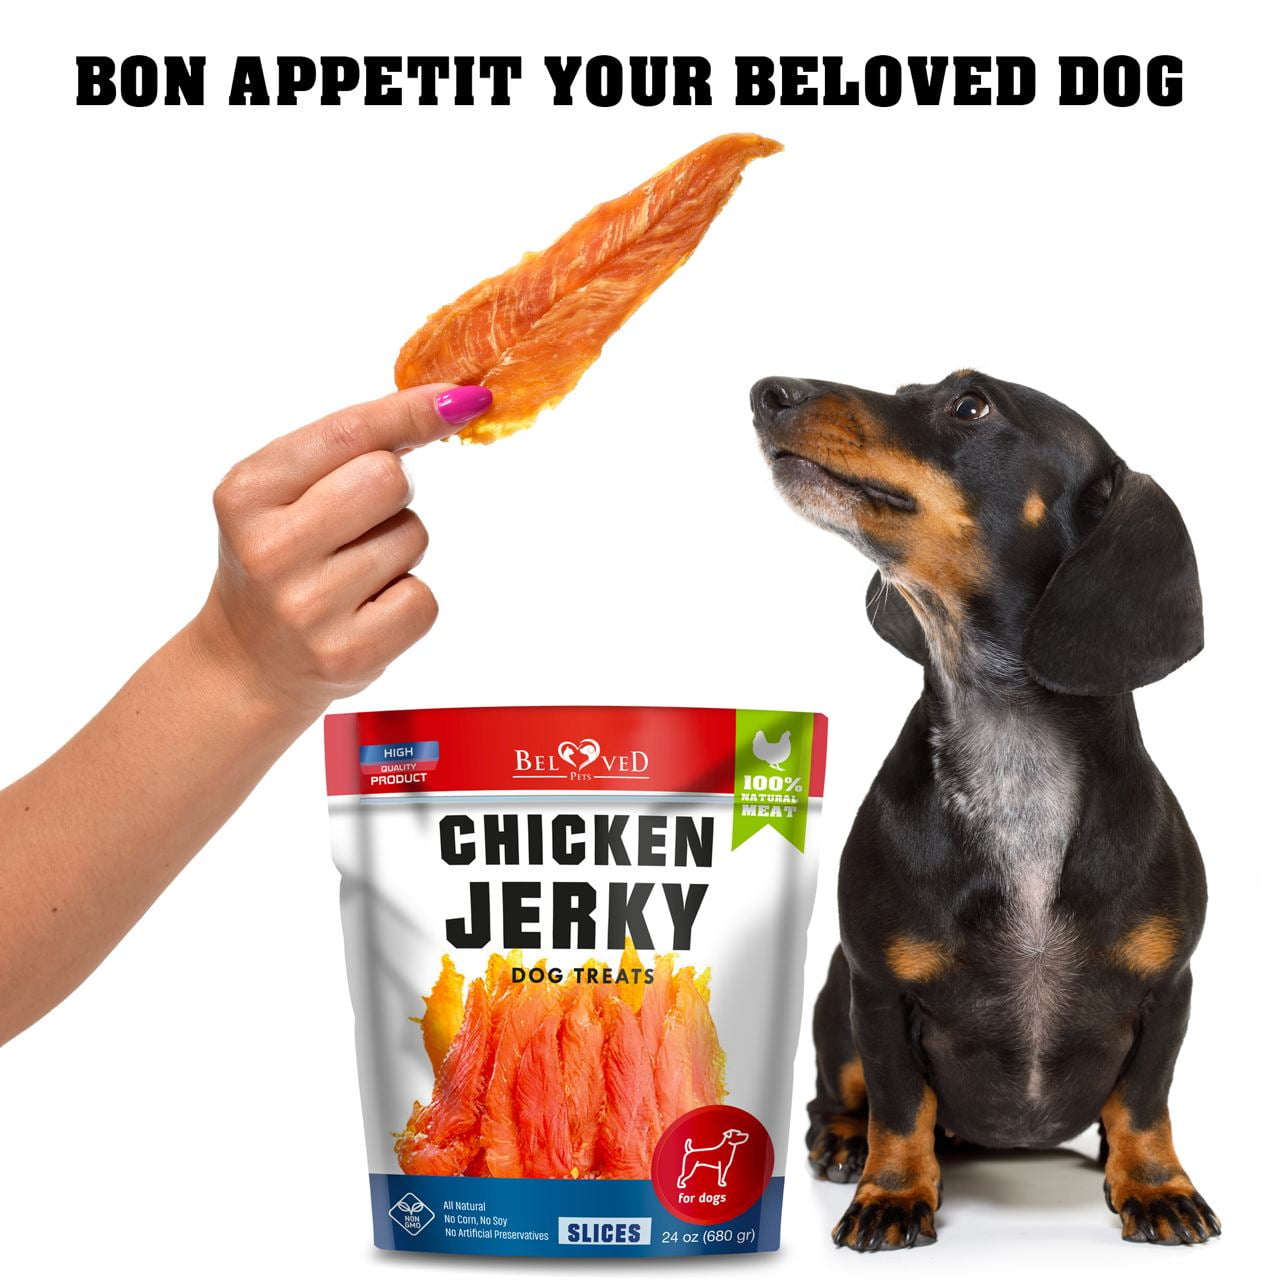 Chewbebe - Chicken Jerky Chips Dog Treats - 2.8-oz - Natural Pet Pantry